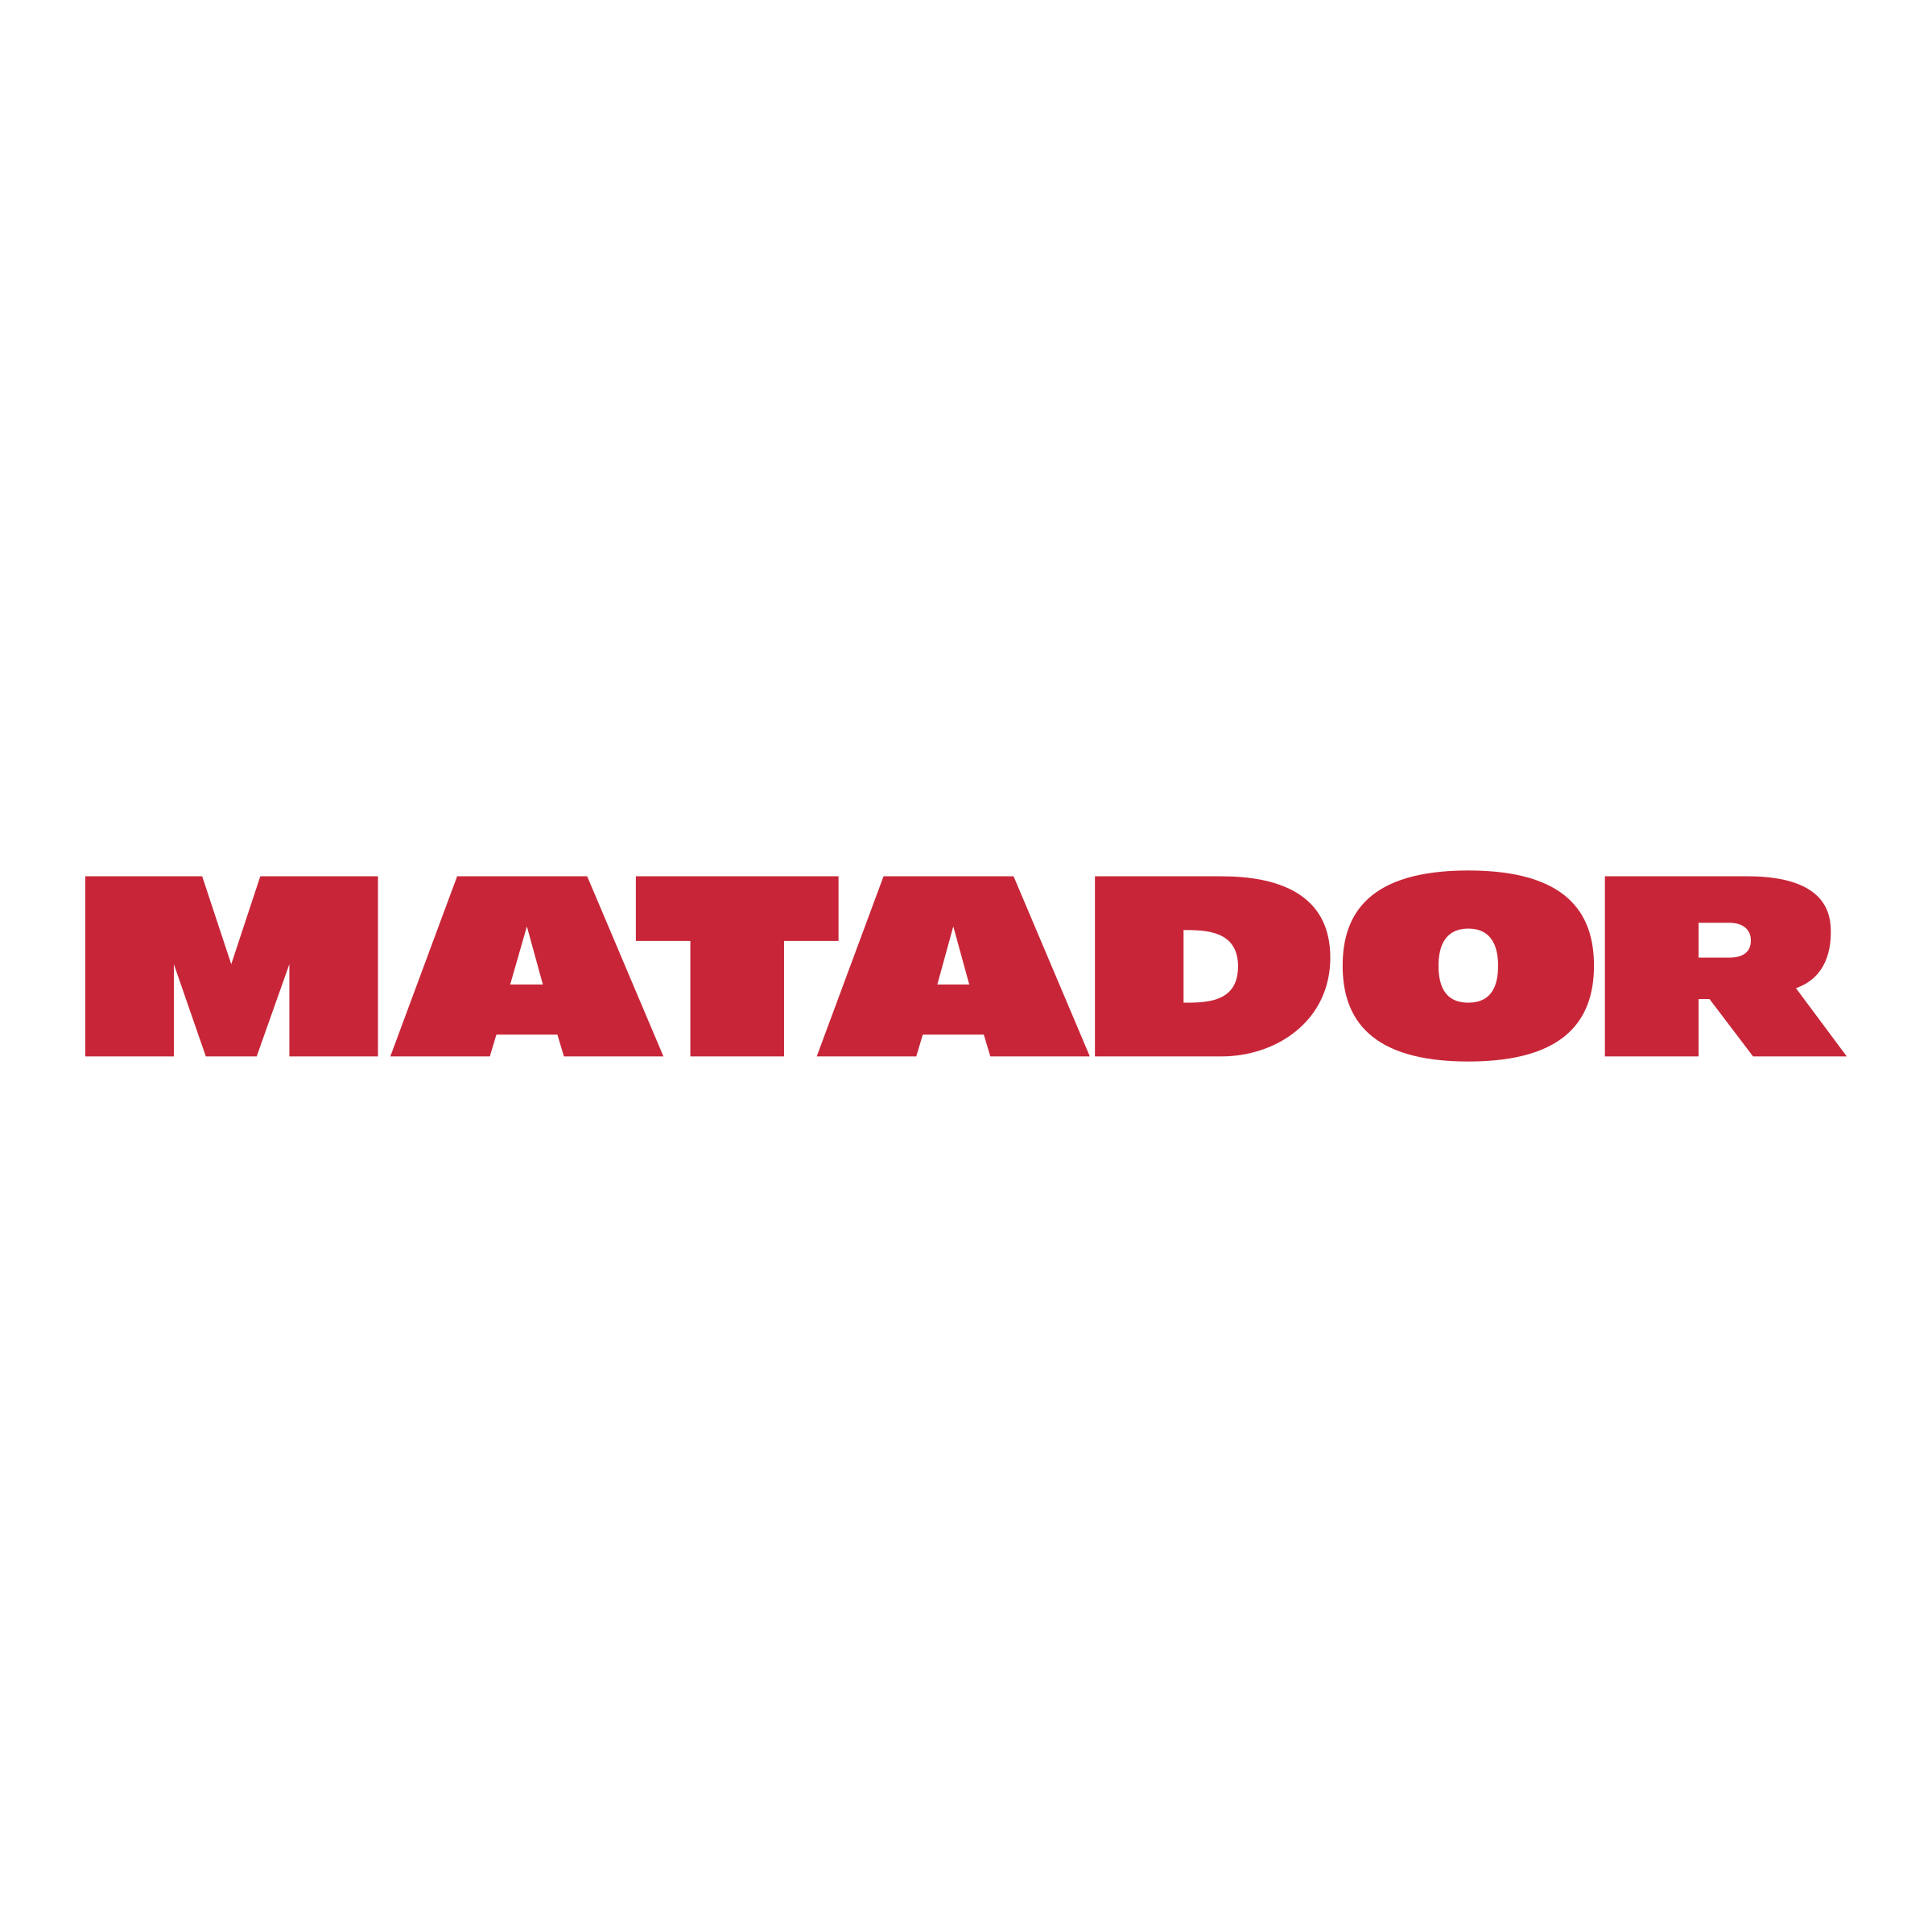 Matador Logo - Matador Logo PNG Transparent & SVG Vector - Freebie Supply